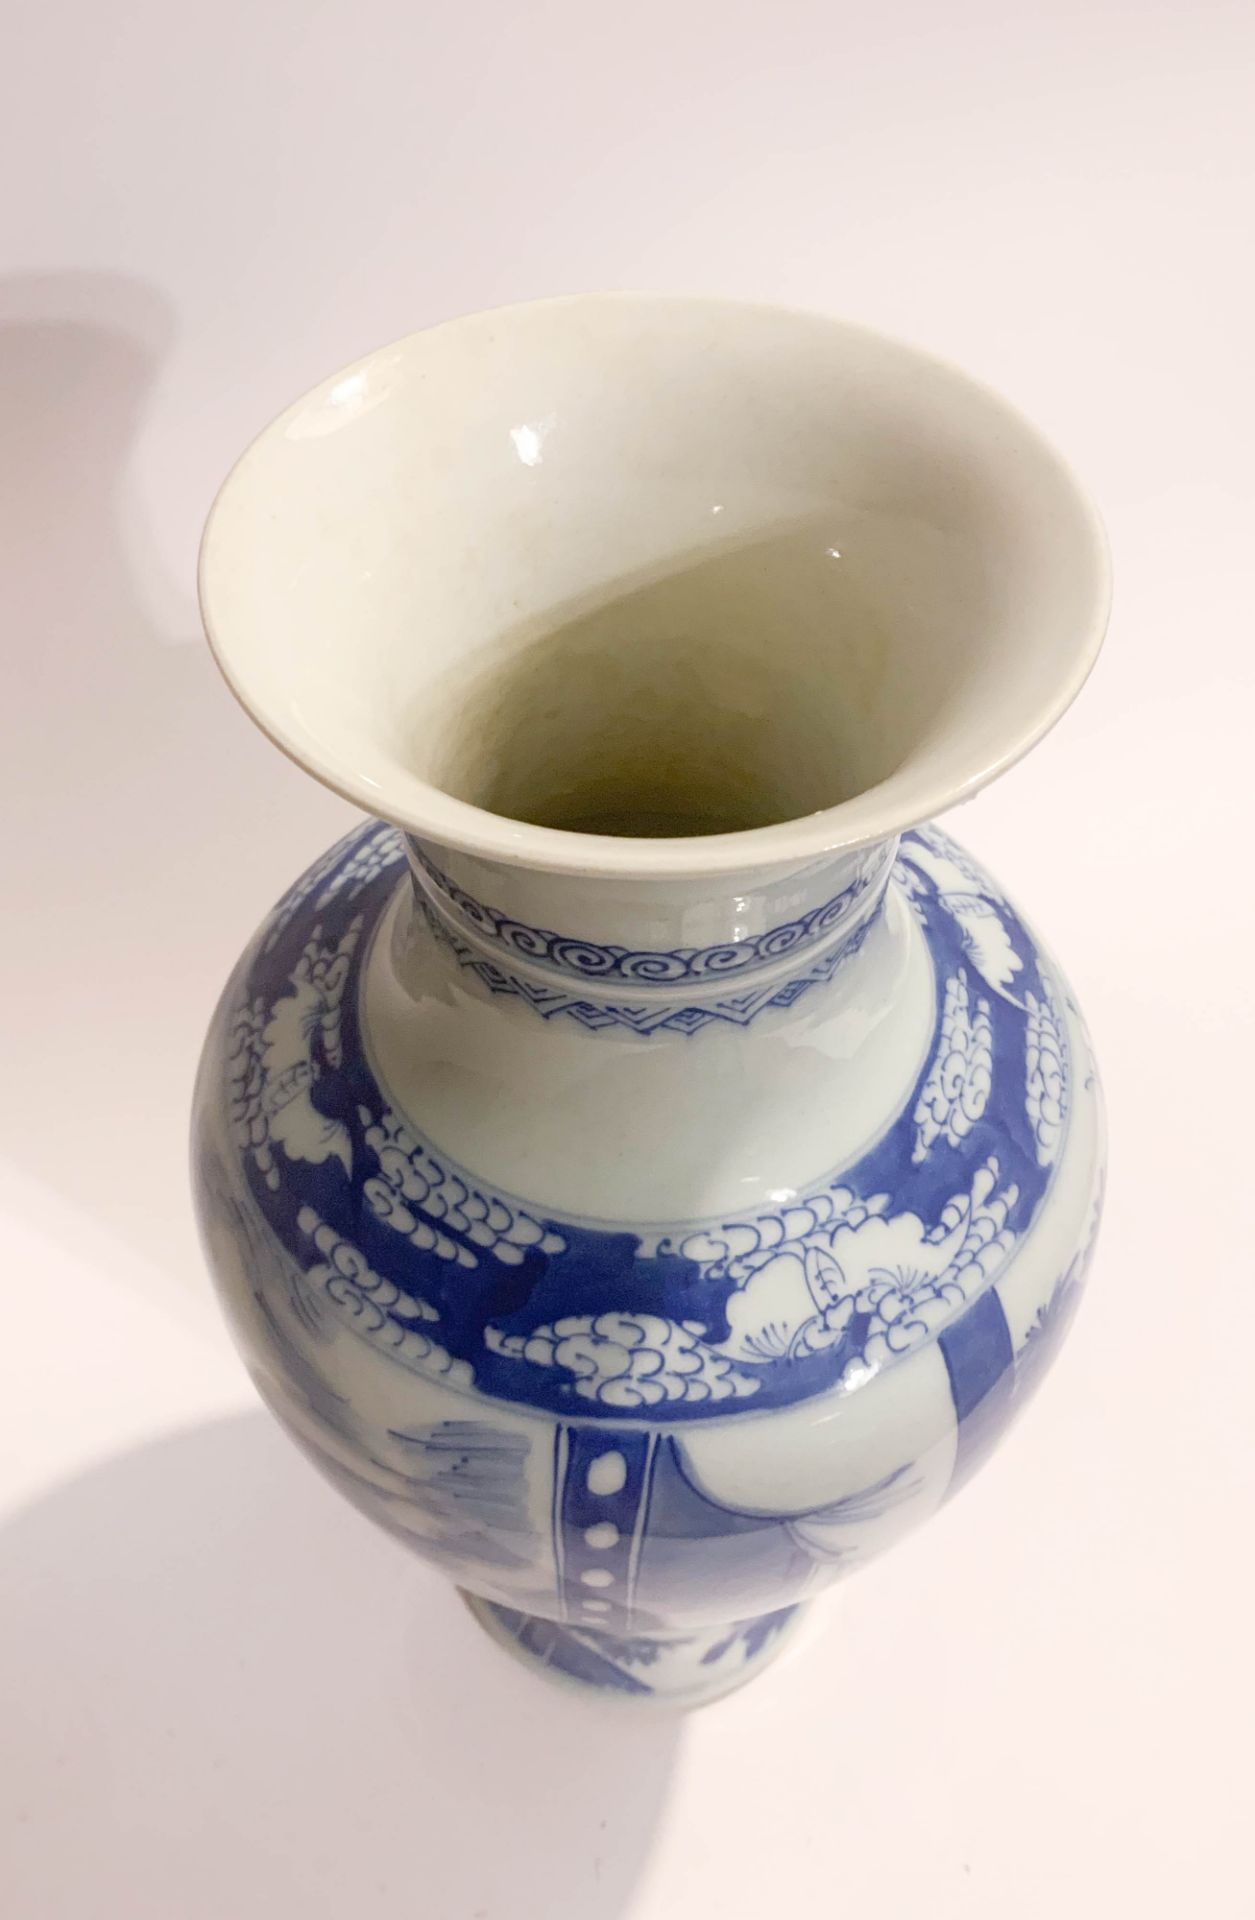  Floor vase China Qing dynasty 19th century - Image 7 of 11